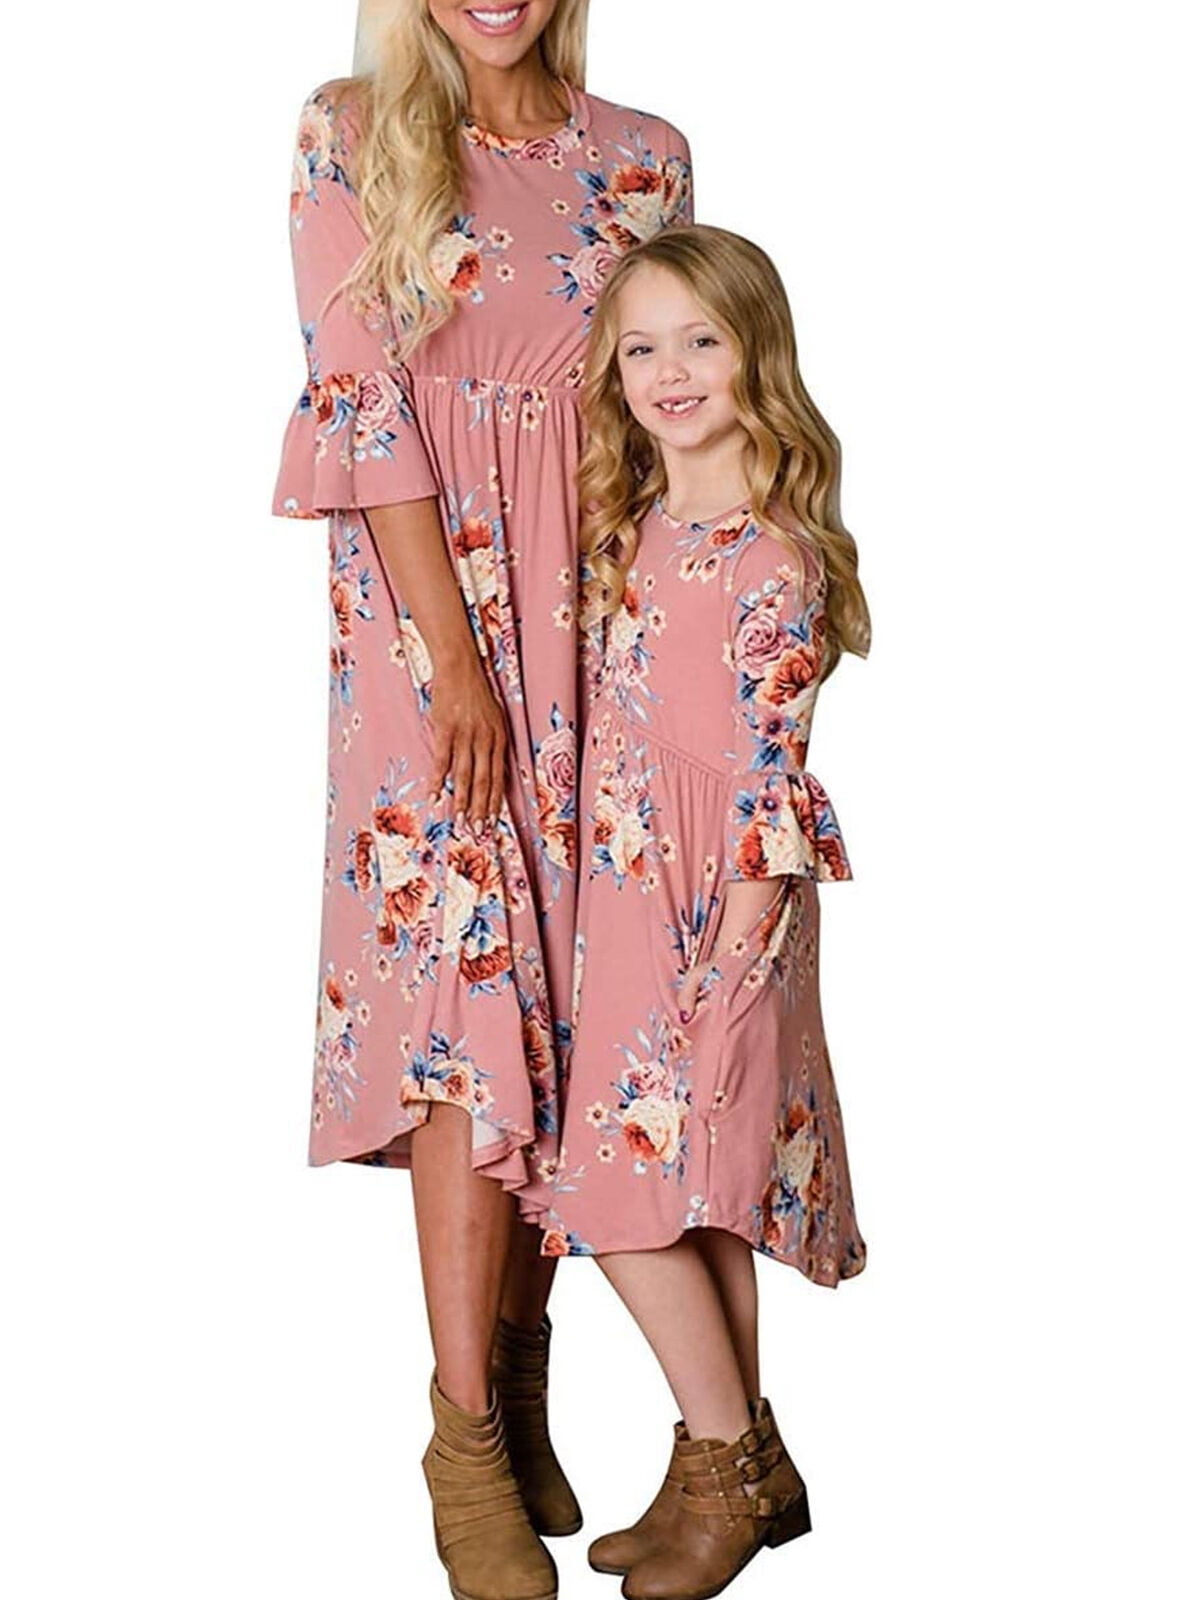 Family Matching Fruit Print Summer Dress Mommy and Me 1 Piece Patchwork Sleeveless Tank Dress Sundress